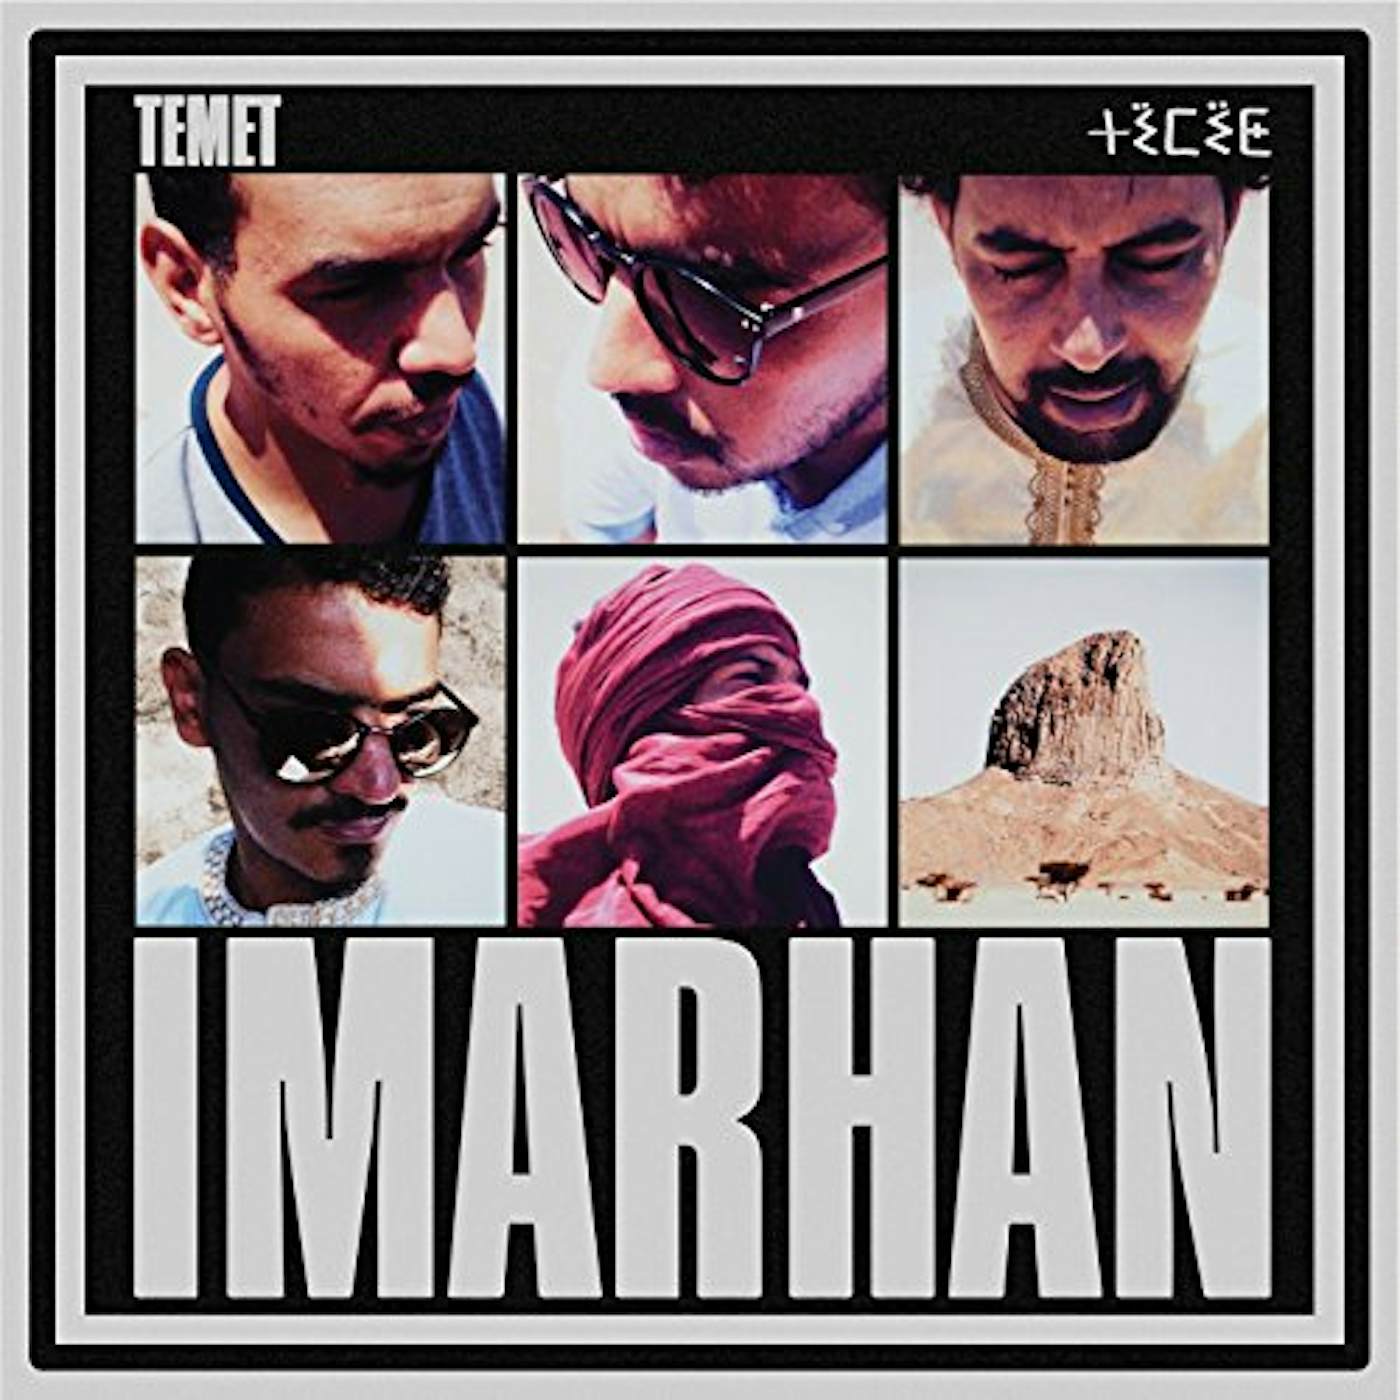 Imarhan Temet Vinyl Record